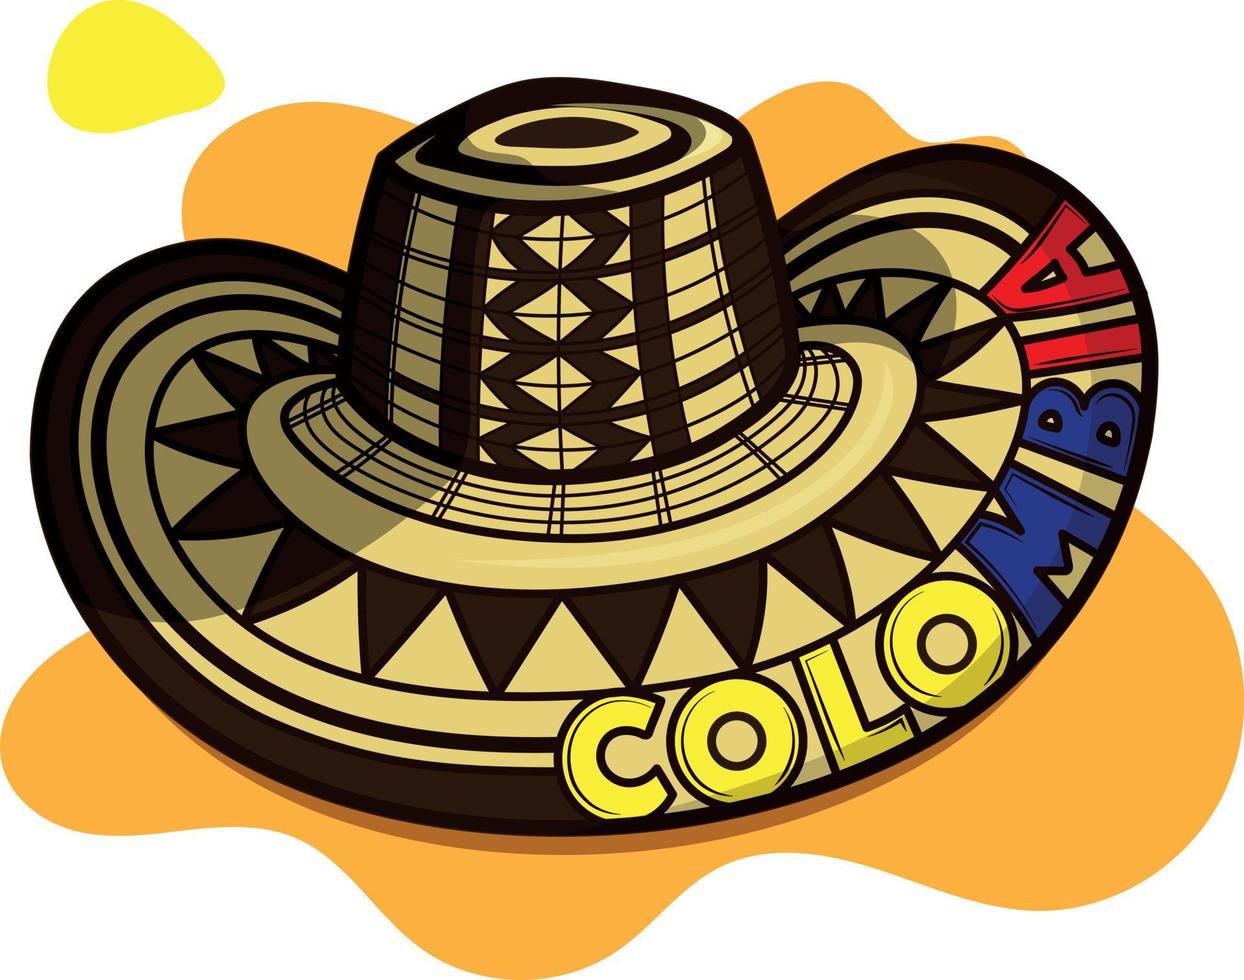 sombrero vueltiao Colombia vettore